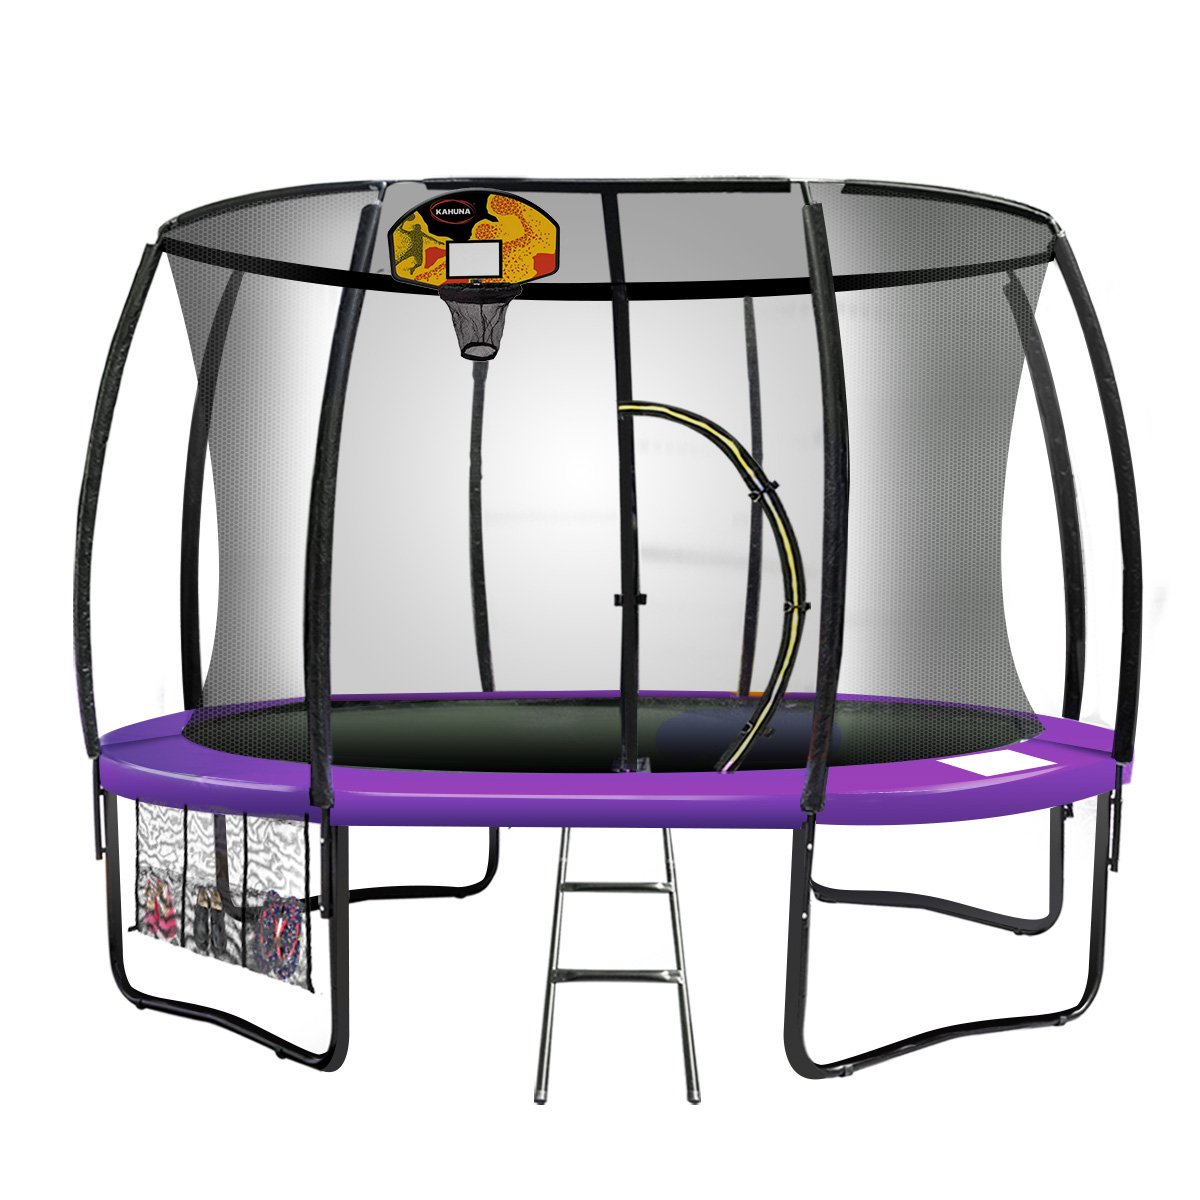 Trampoline 10ft Kahuna with  Basket ball set - Purple